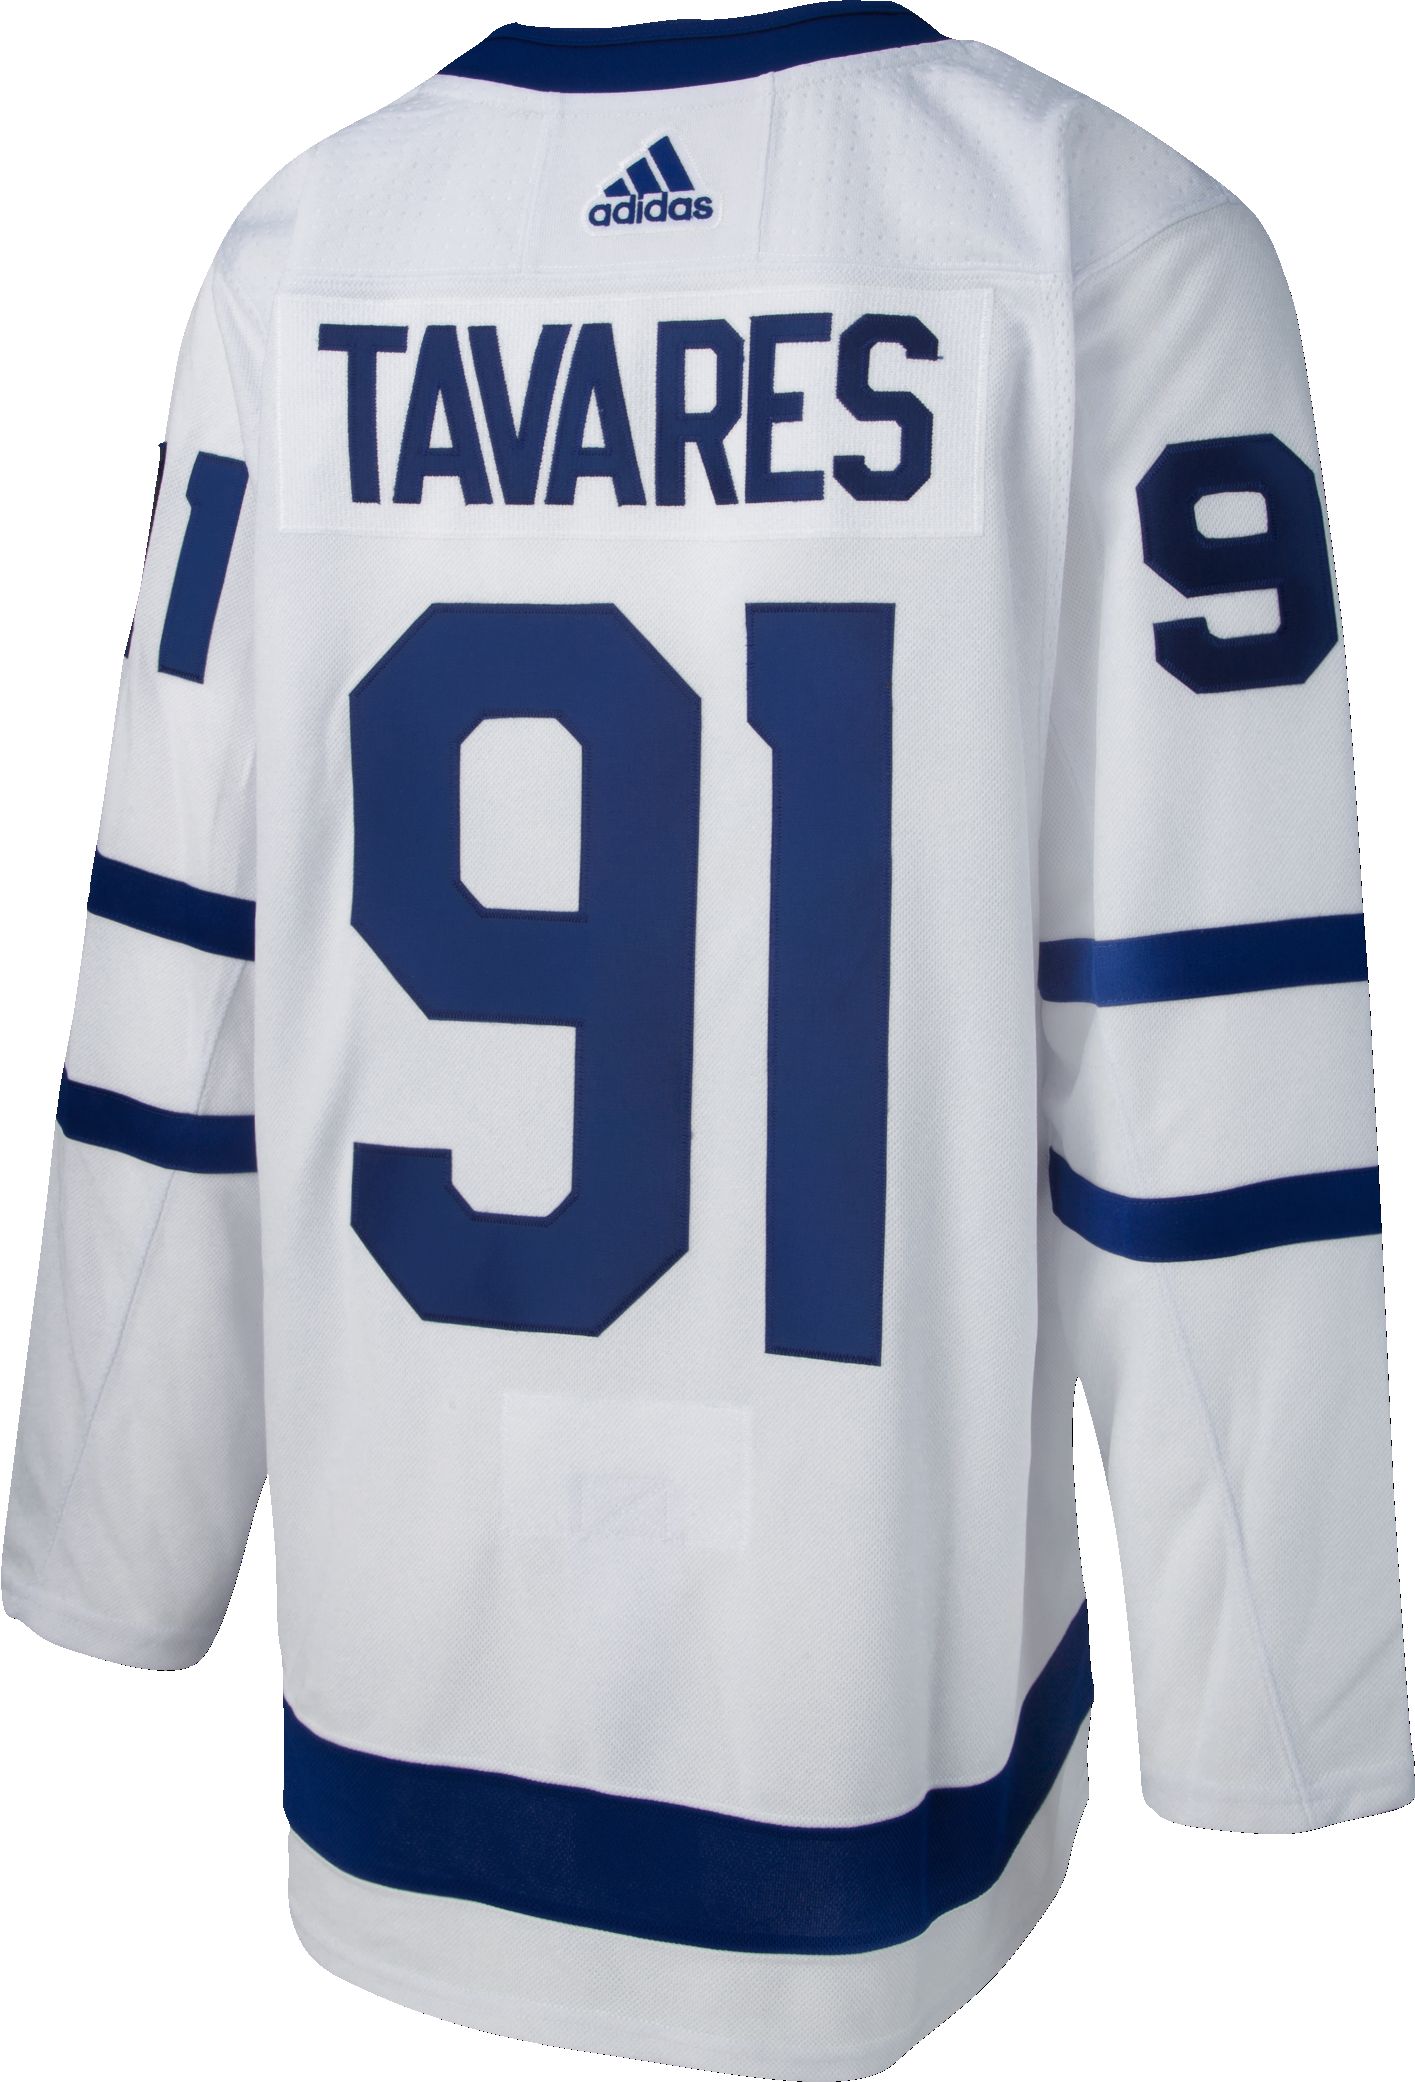 Toronto Maple Leafs Jerseys, Maple Leafs Adidas Jerseys, Maple